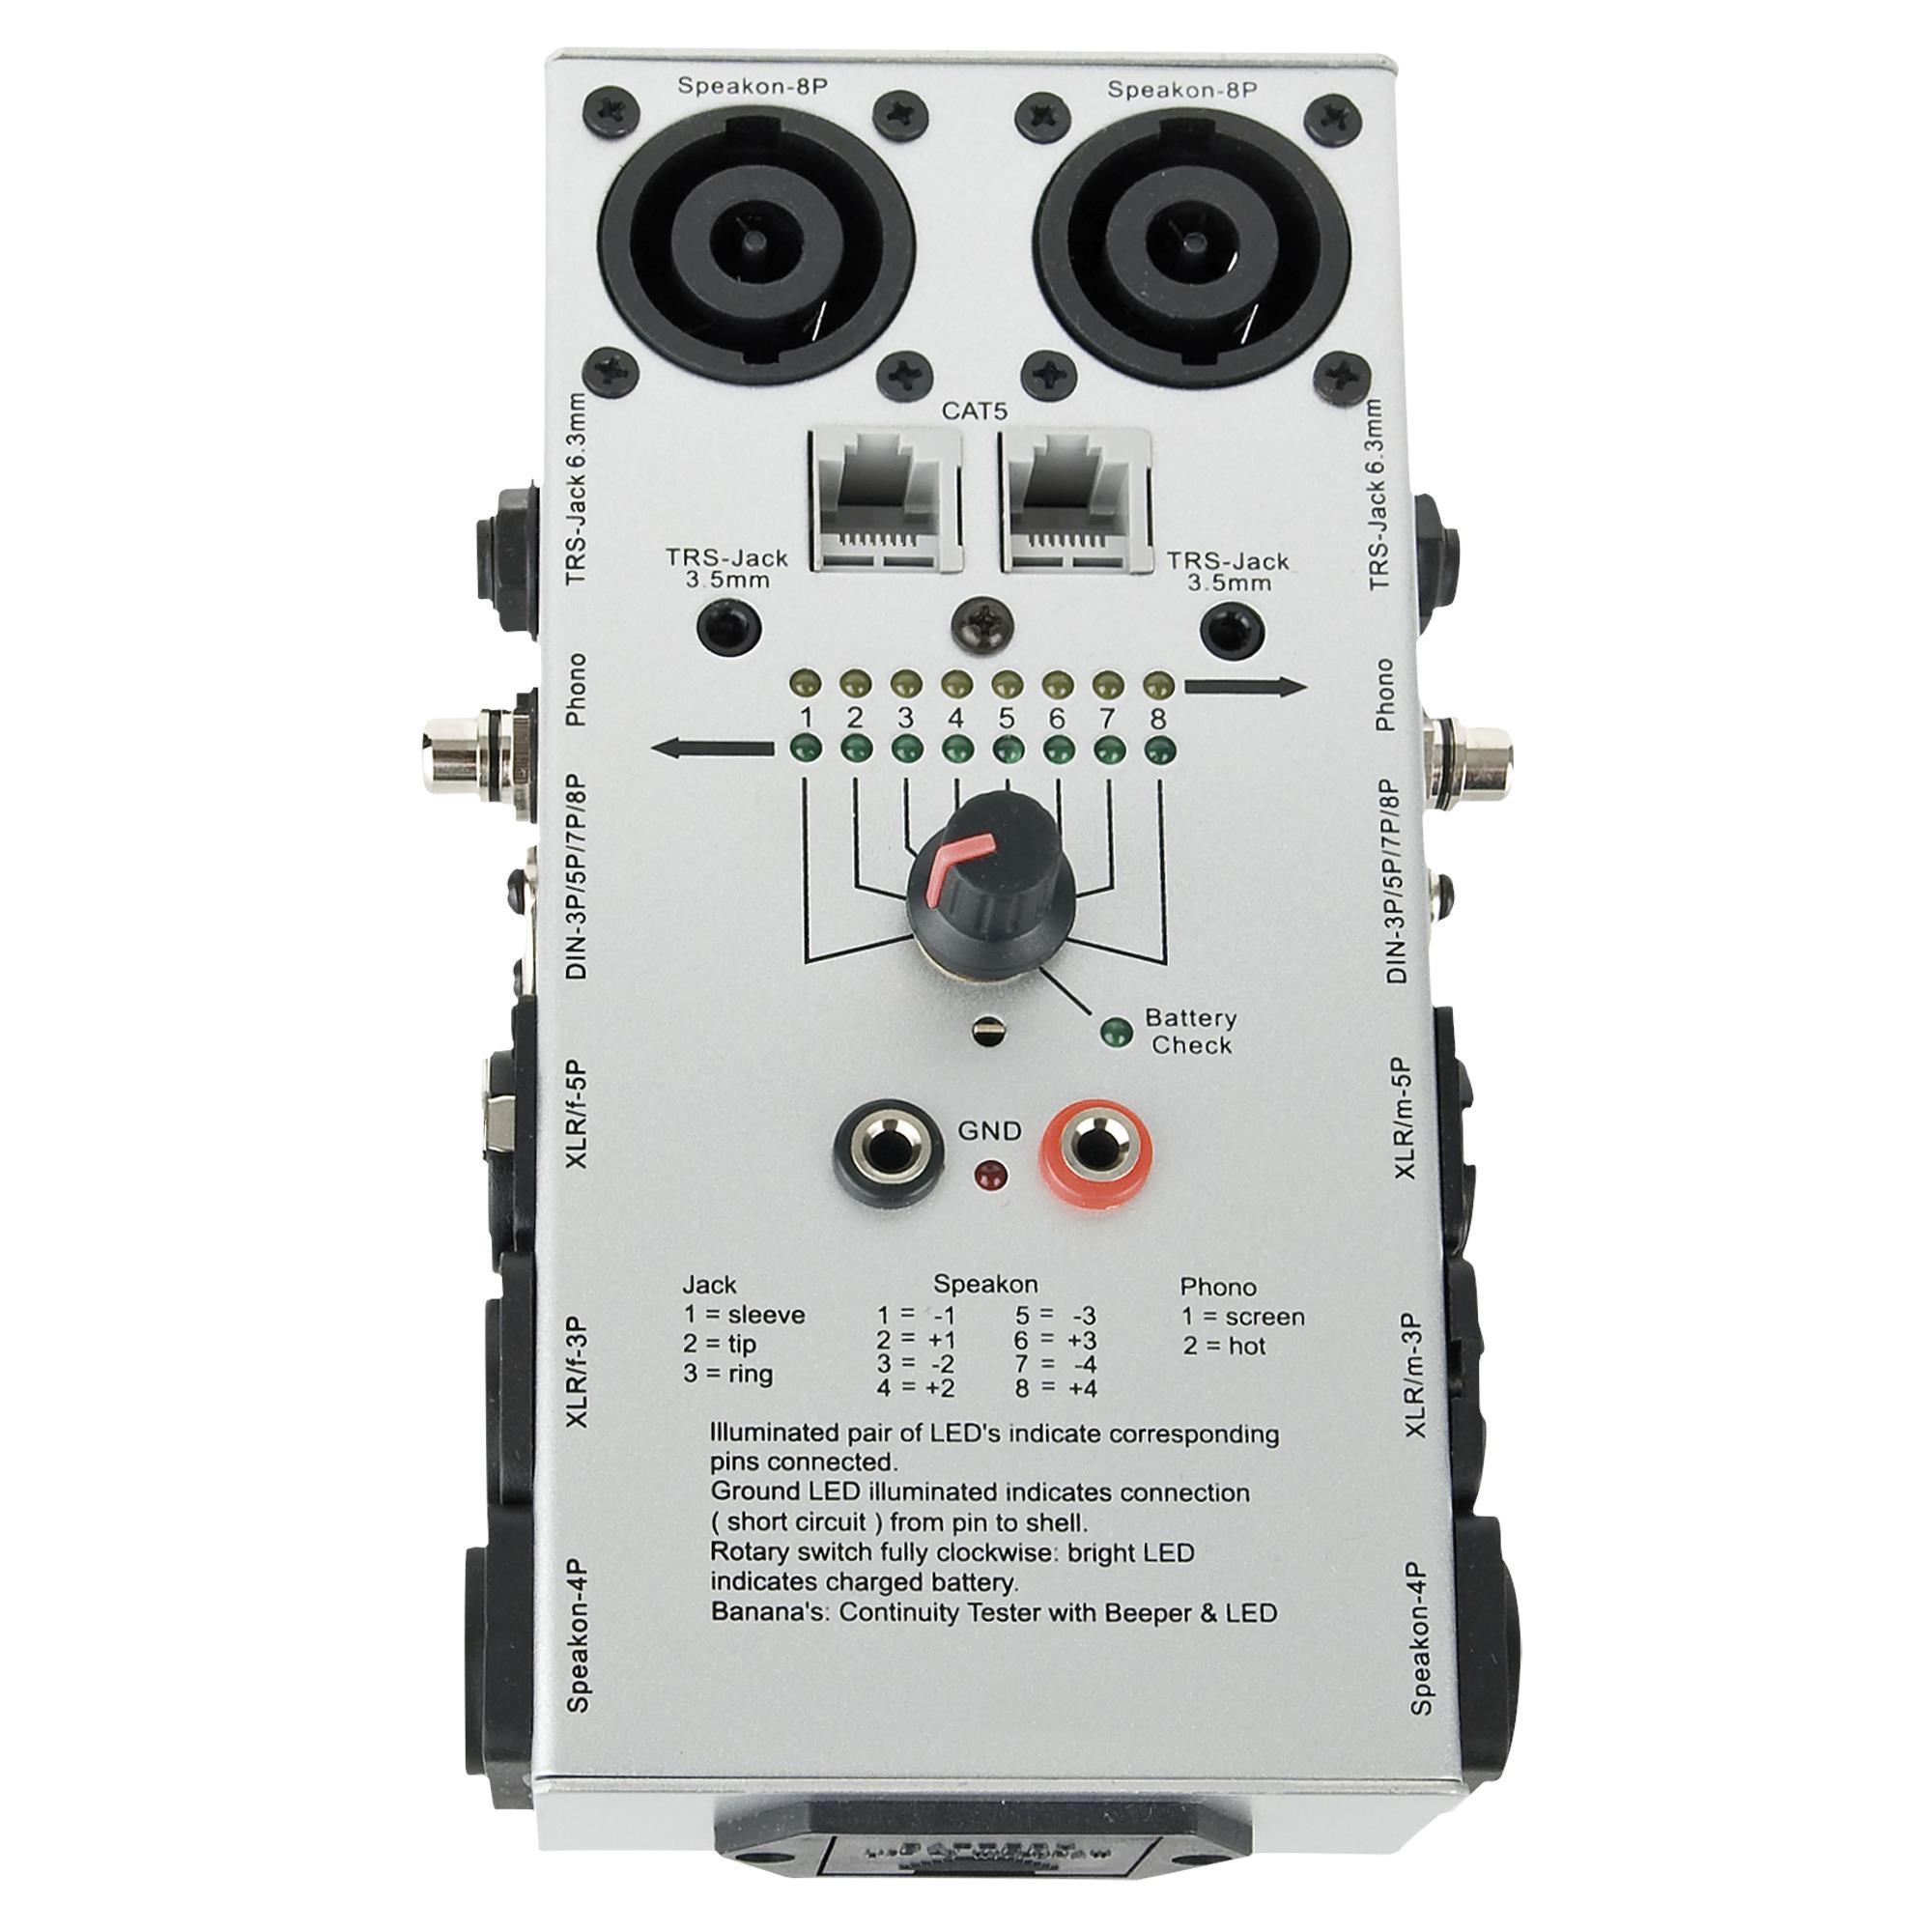 Showgear Cable Tester Pro for Audio Cables, Speakon, RJ45, RCA, XLR & MORE! - DY Pro Audio